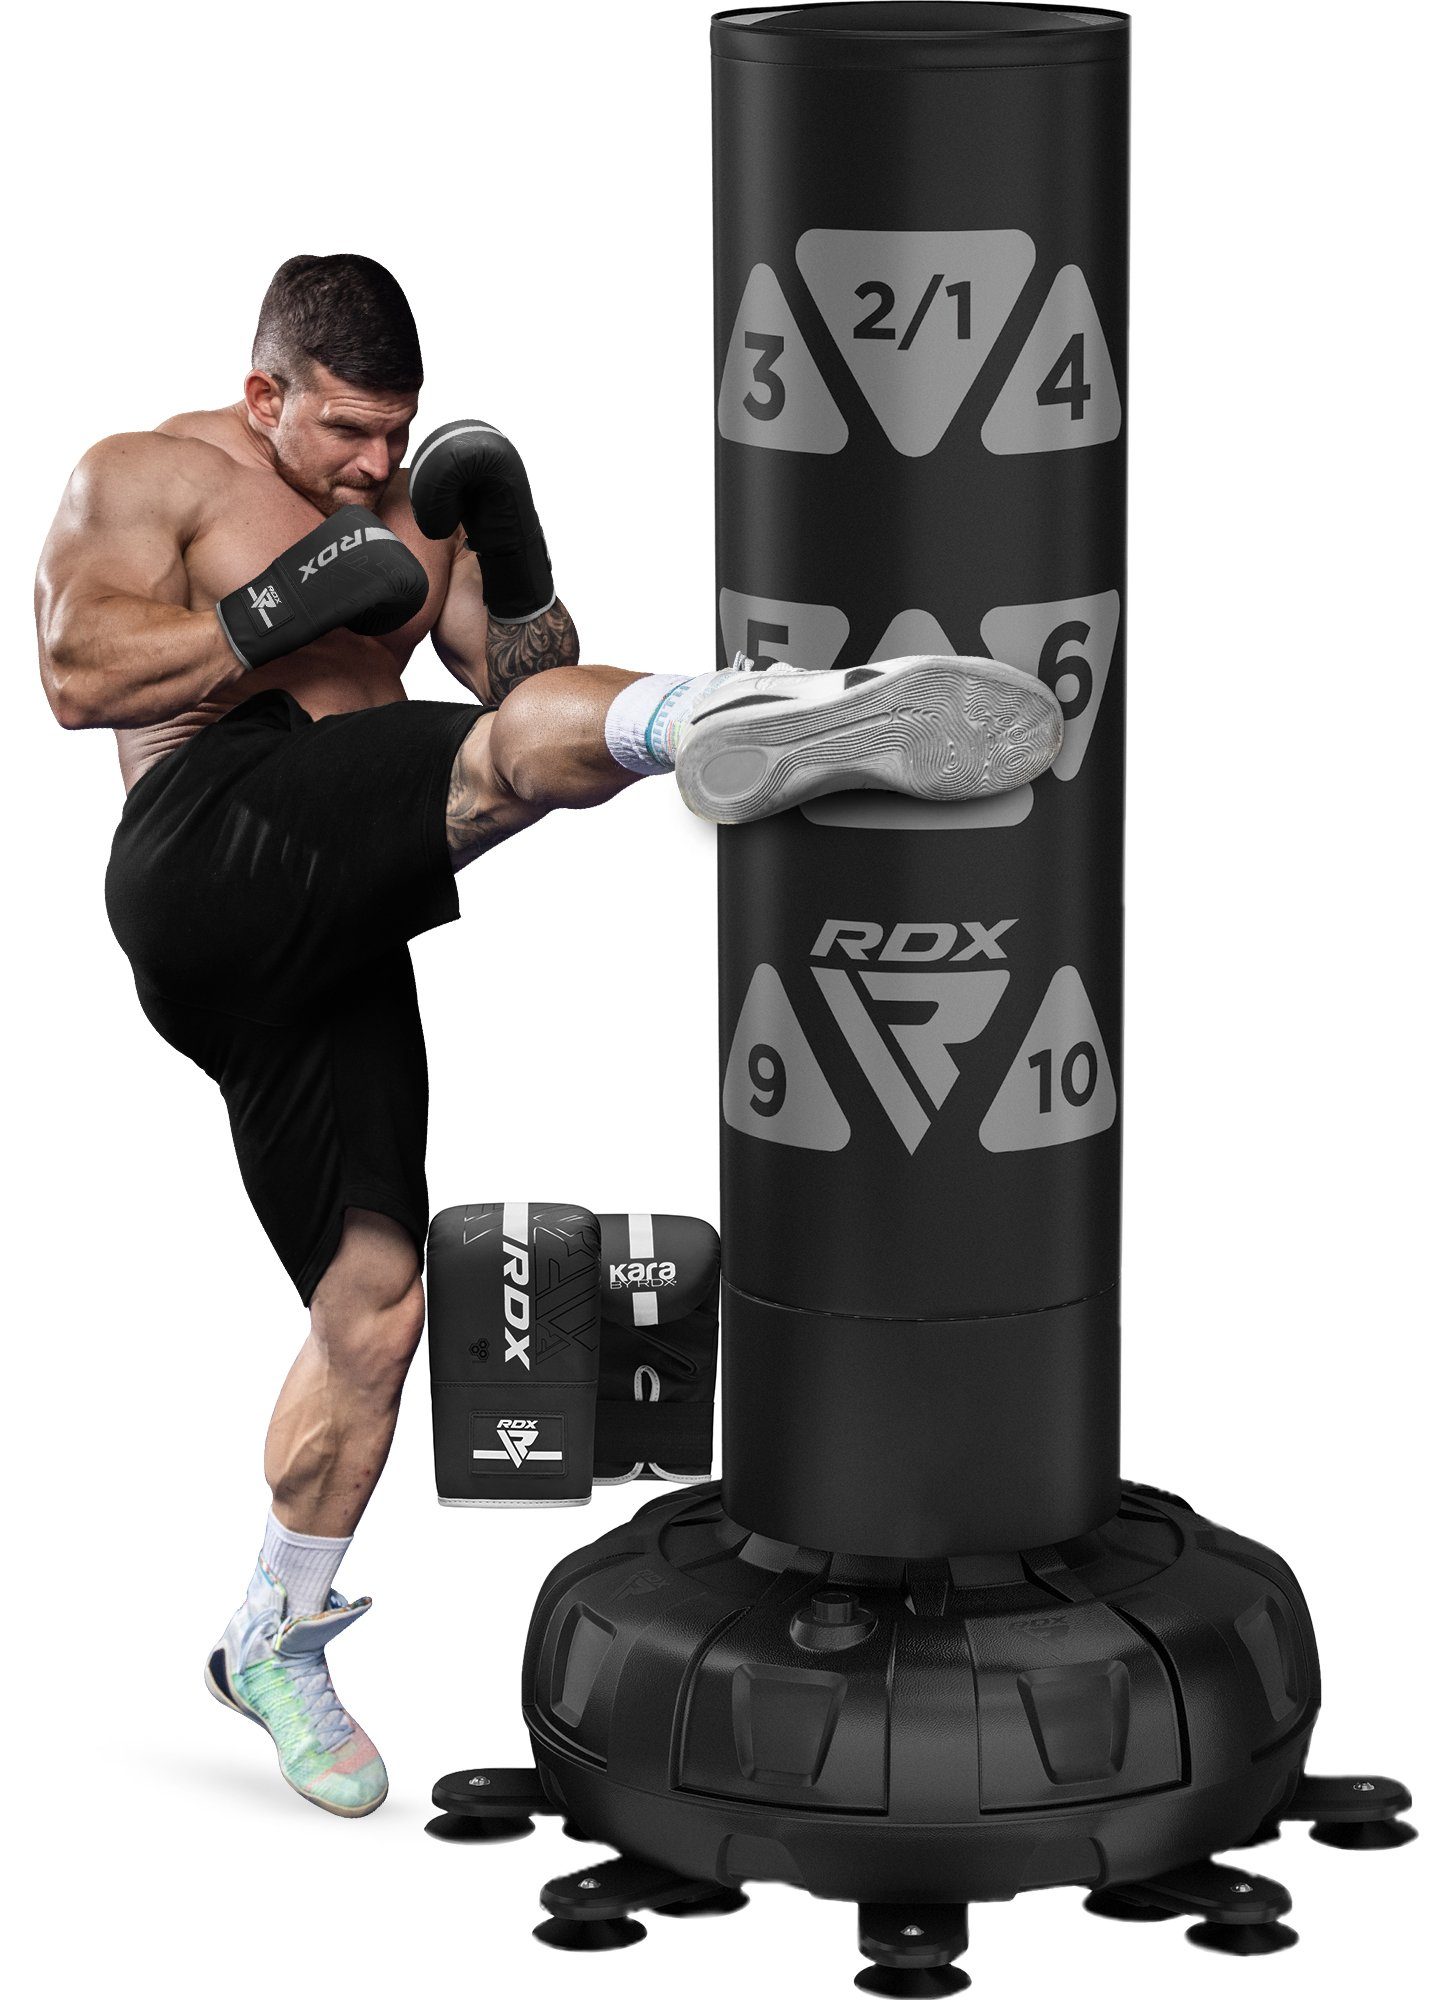 Handschuhen, Boxsack Boxsack RDX 6FT RDX mit Fitness Freistehend SILVER Sports Kickboxen MMA